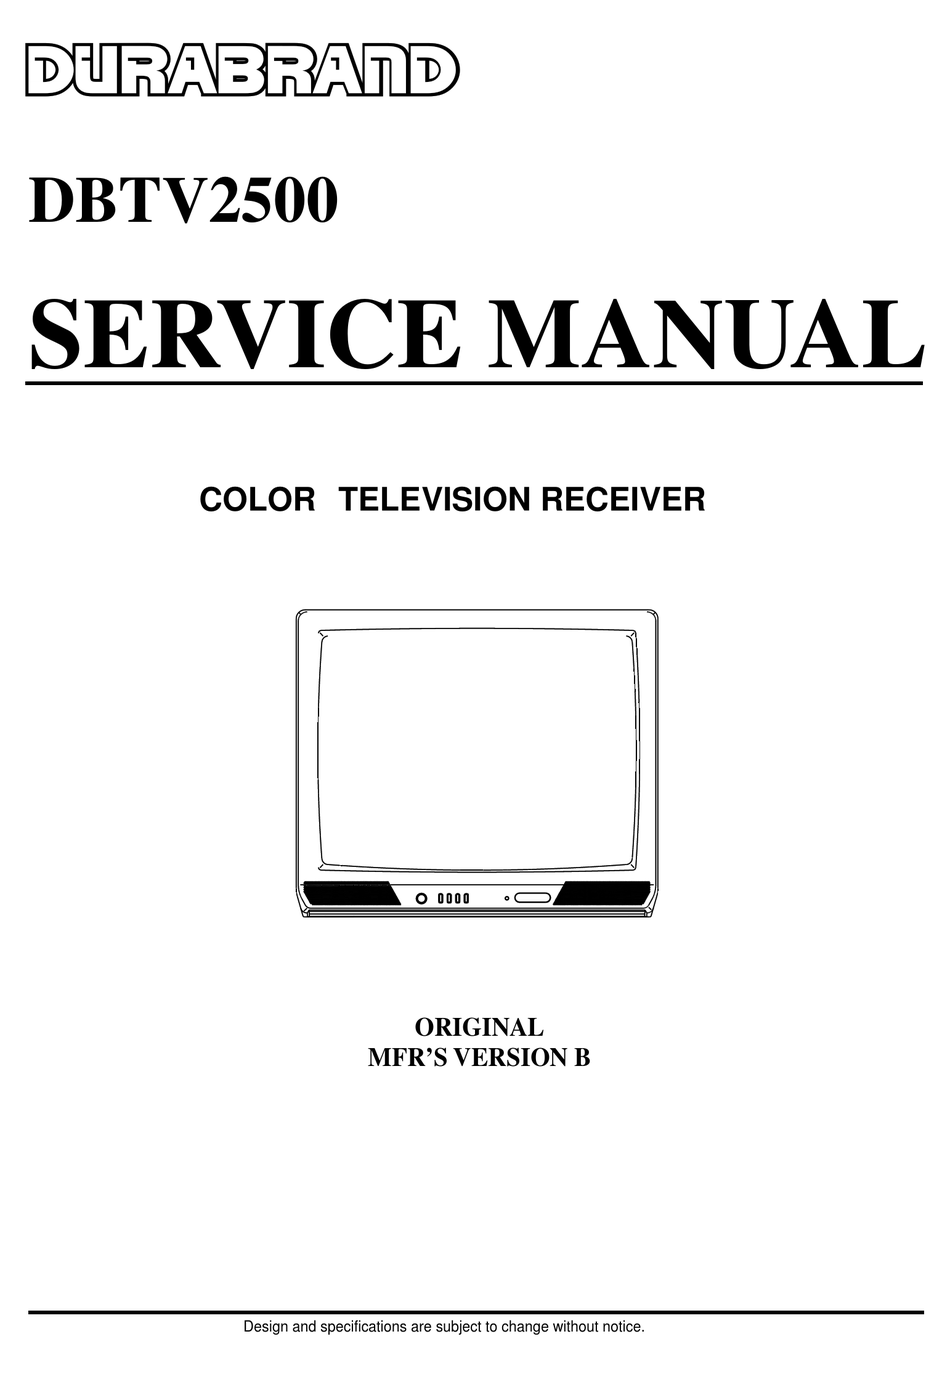 DURABRAND DBTV2500 SERVICE MANUAL Pdf Download | ManualsLib